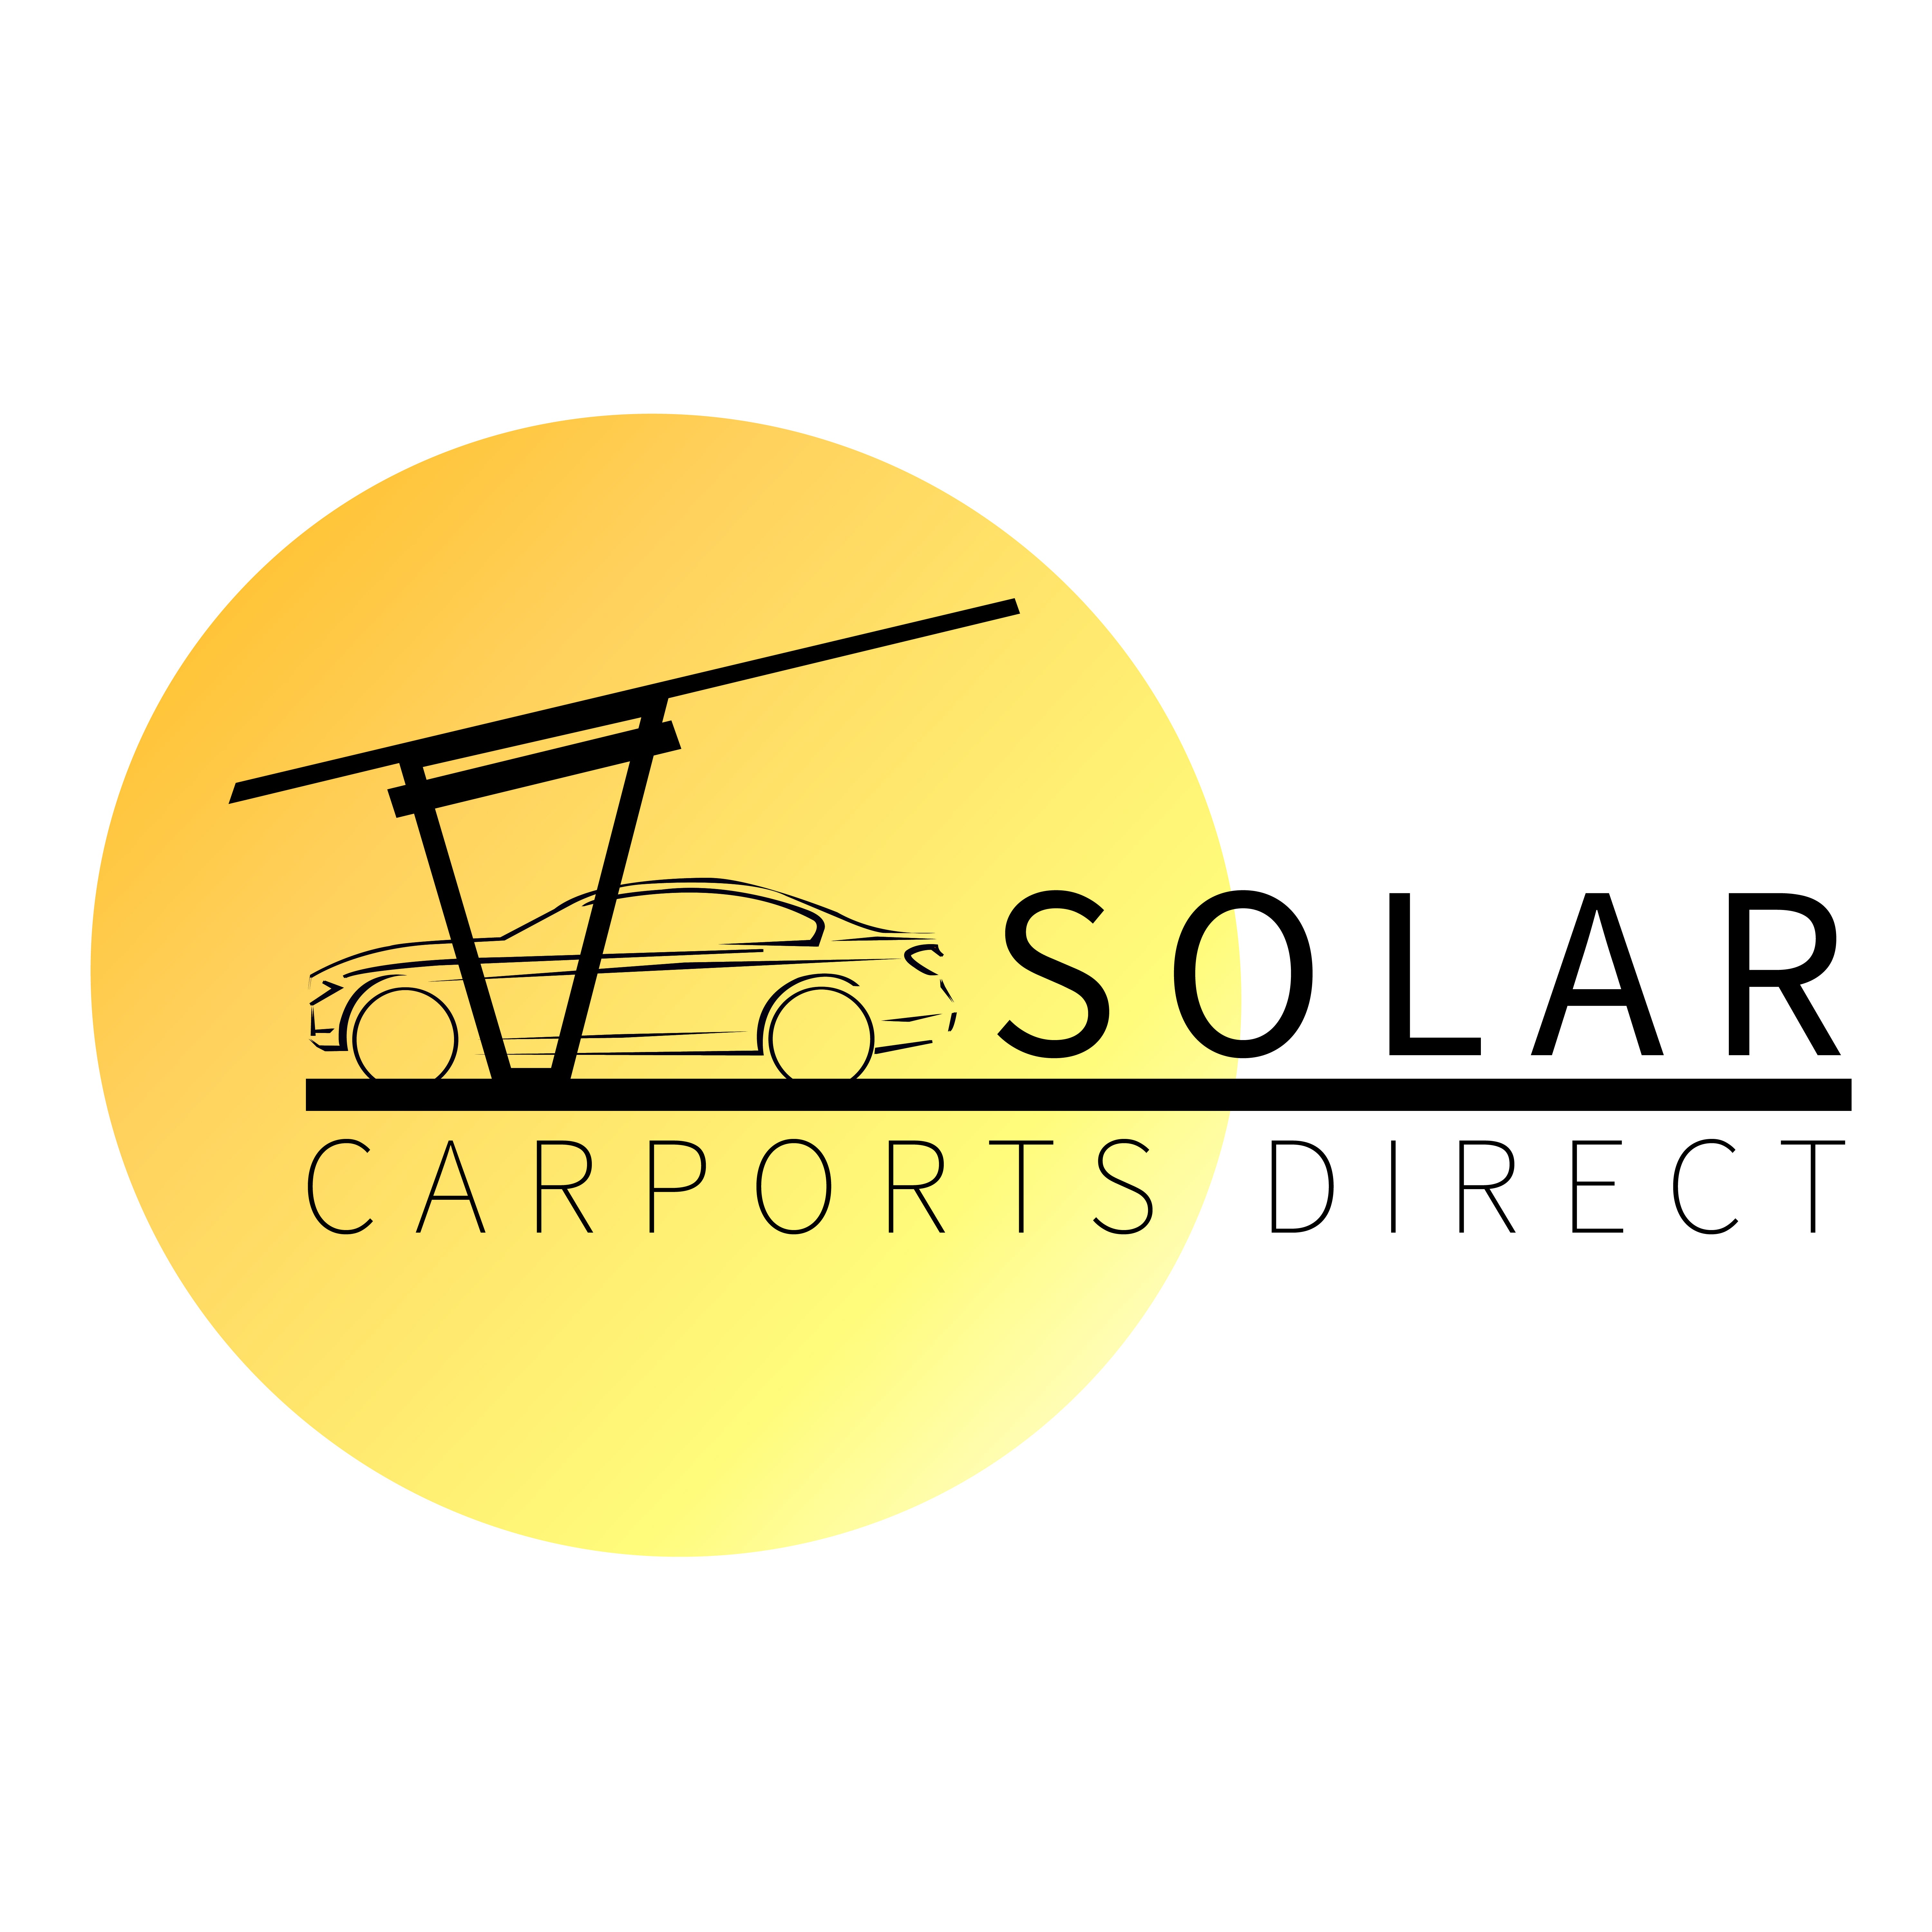 Solar Carports Direct